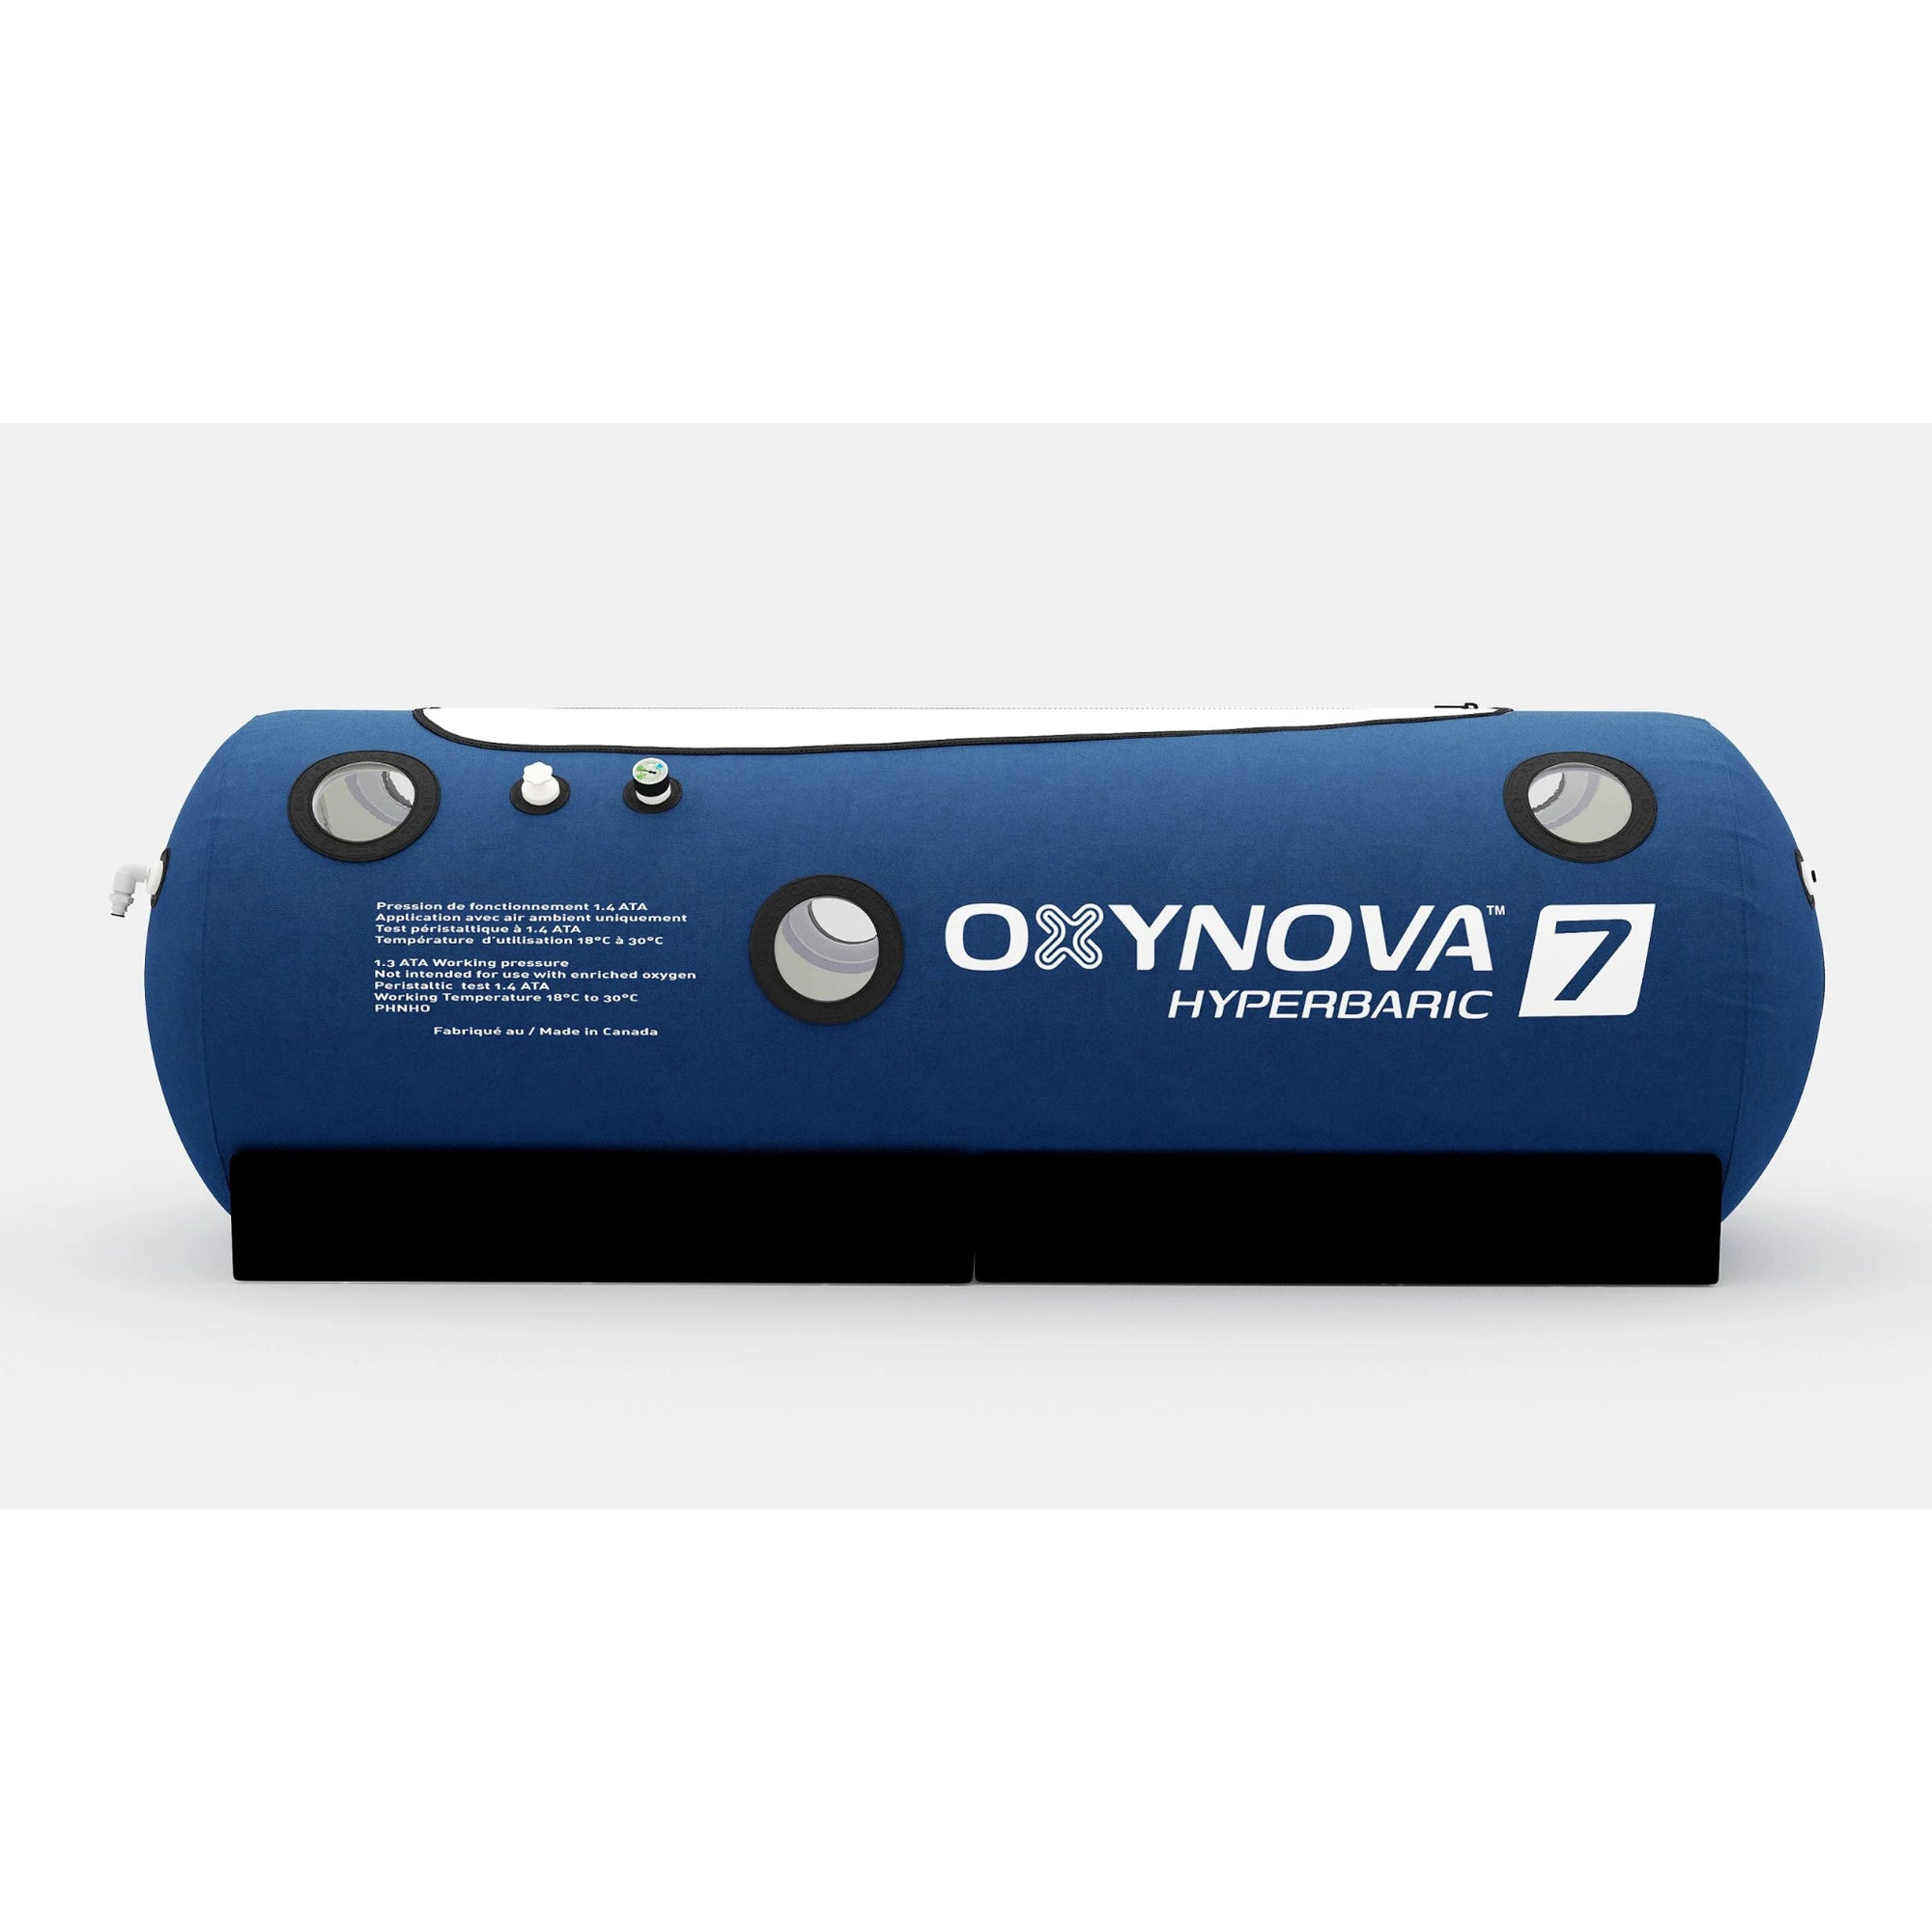 Oxynova